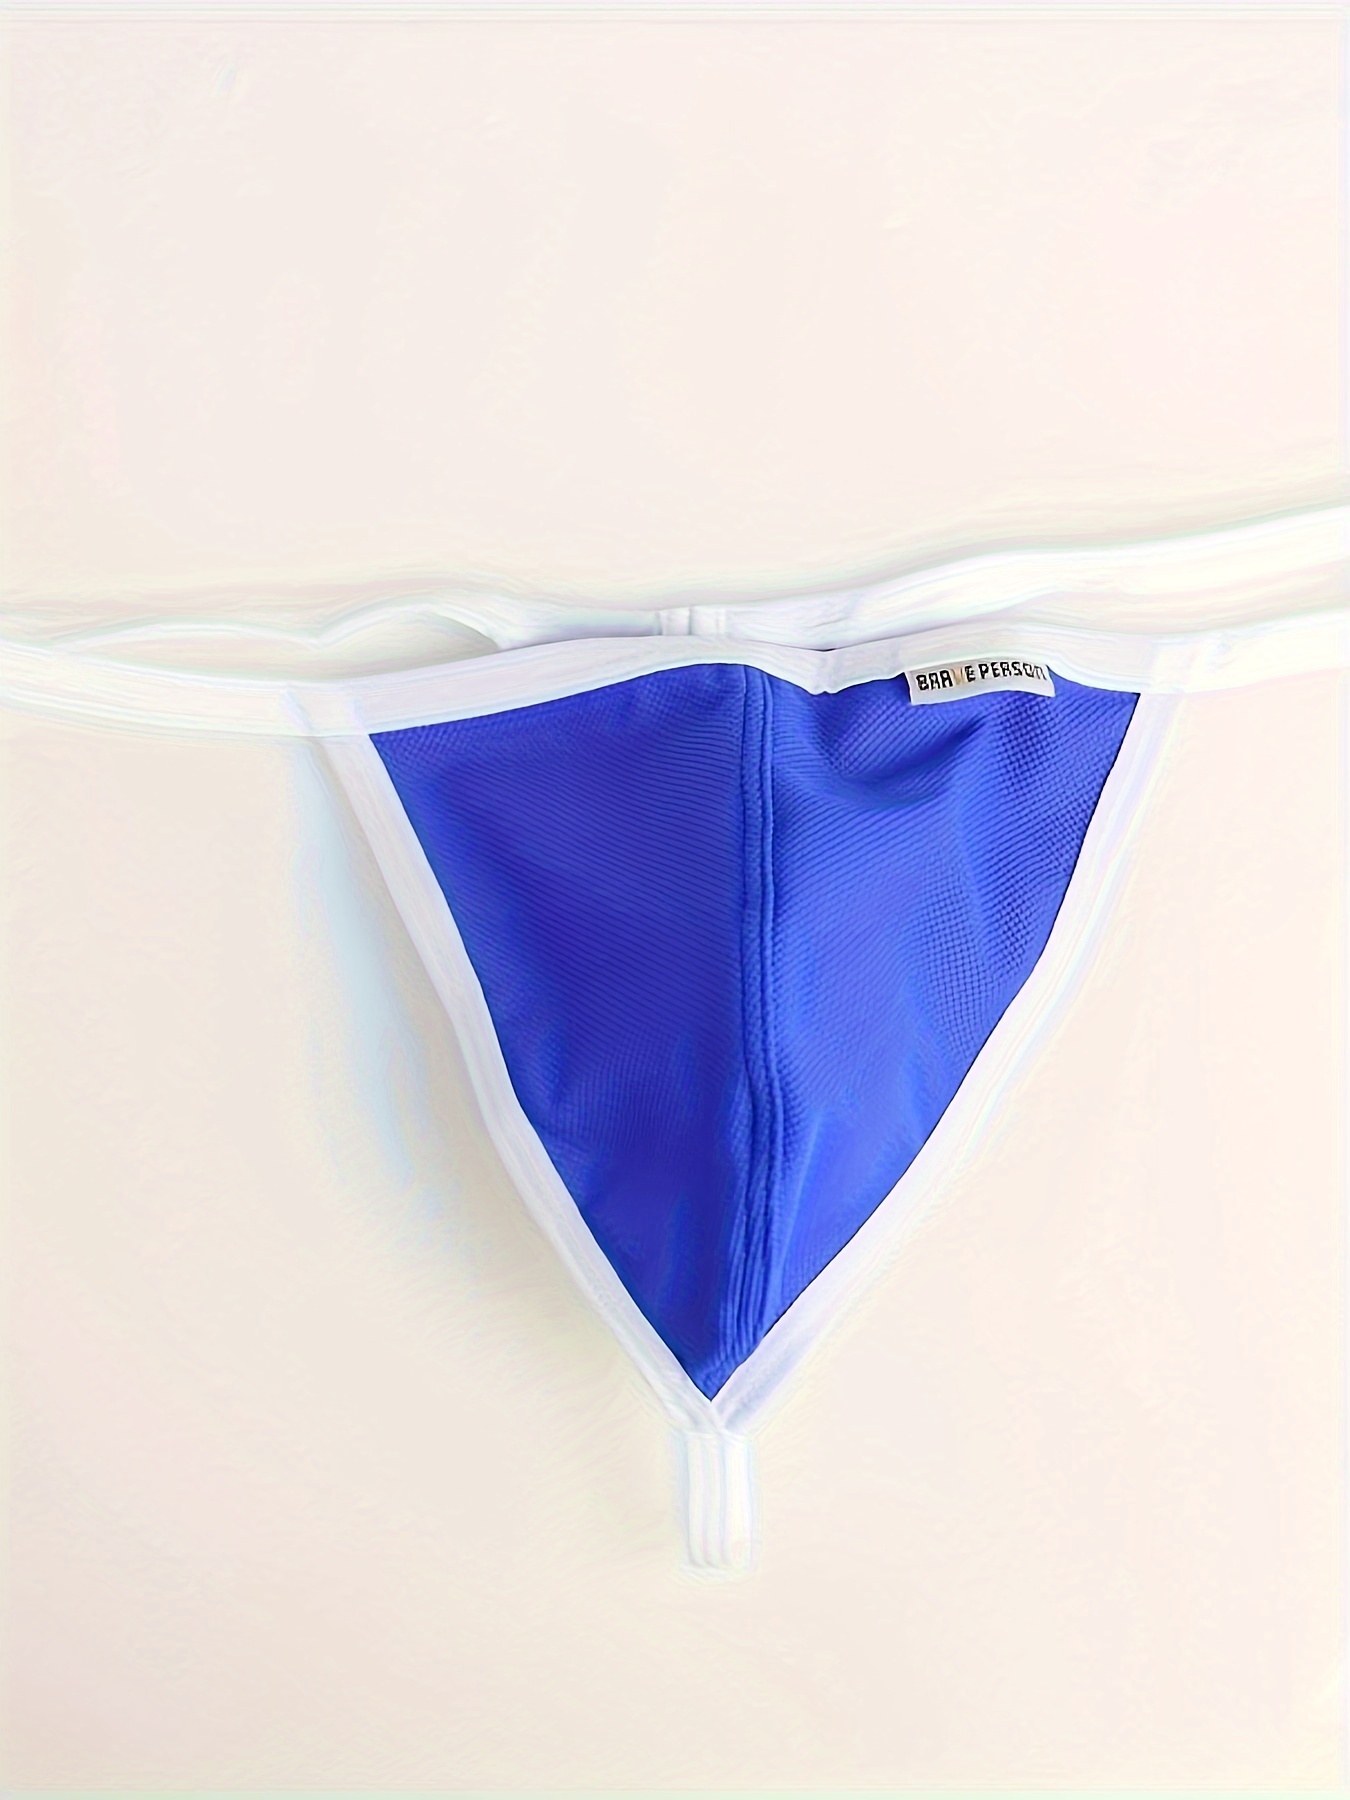 BRAVE PERSON Jock Strap Mens Underwear Briefs Sexy Jockstraps for